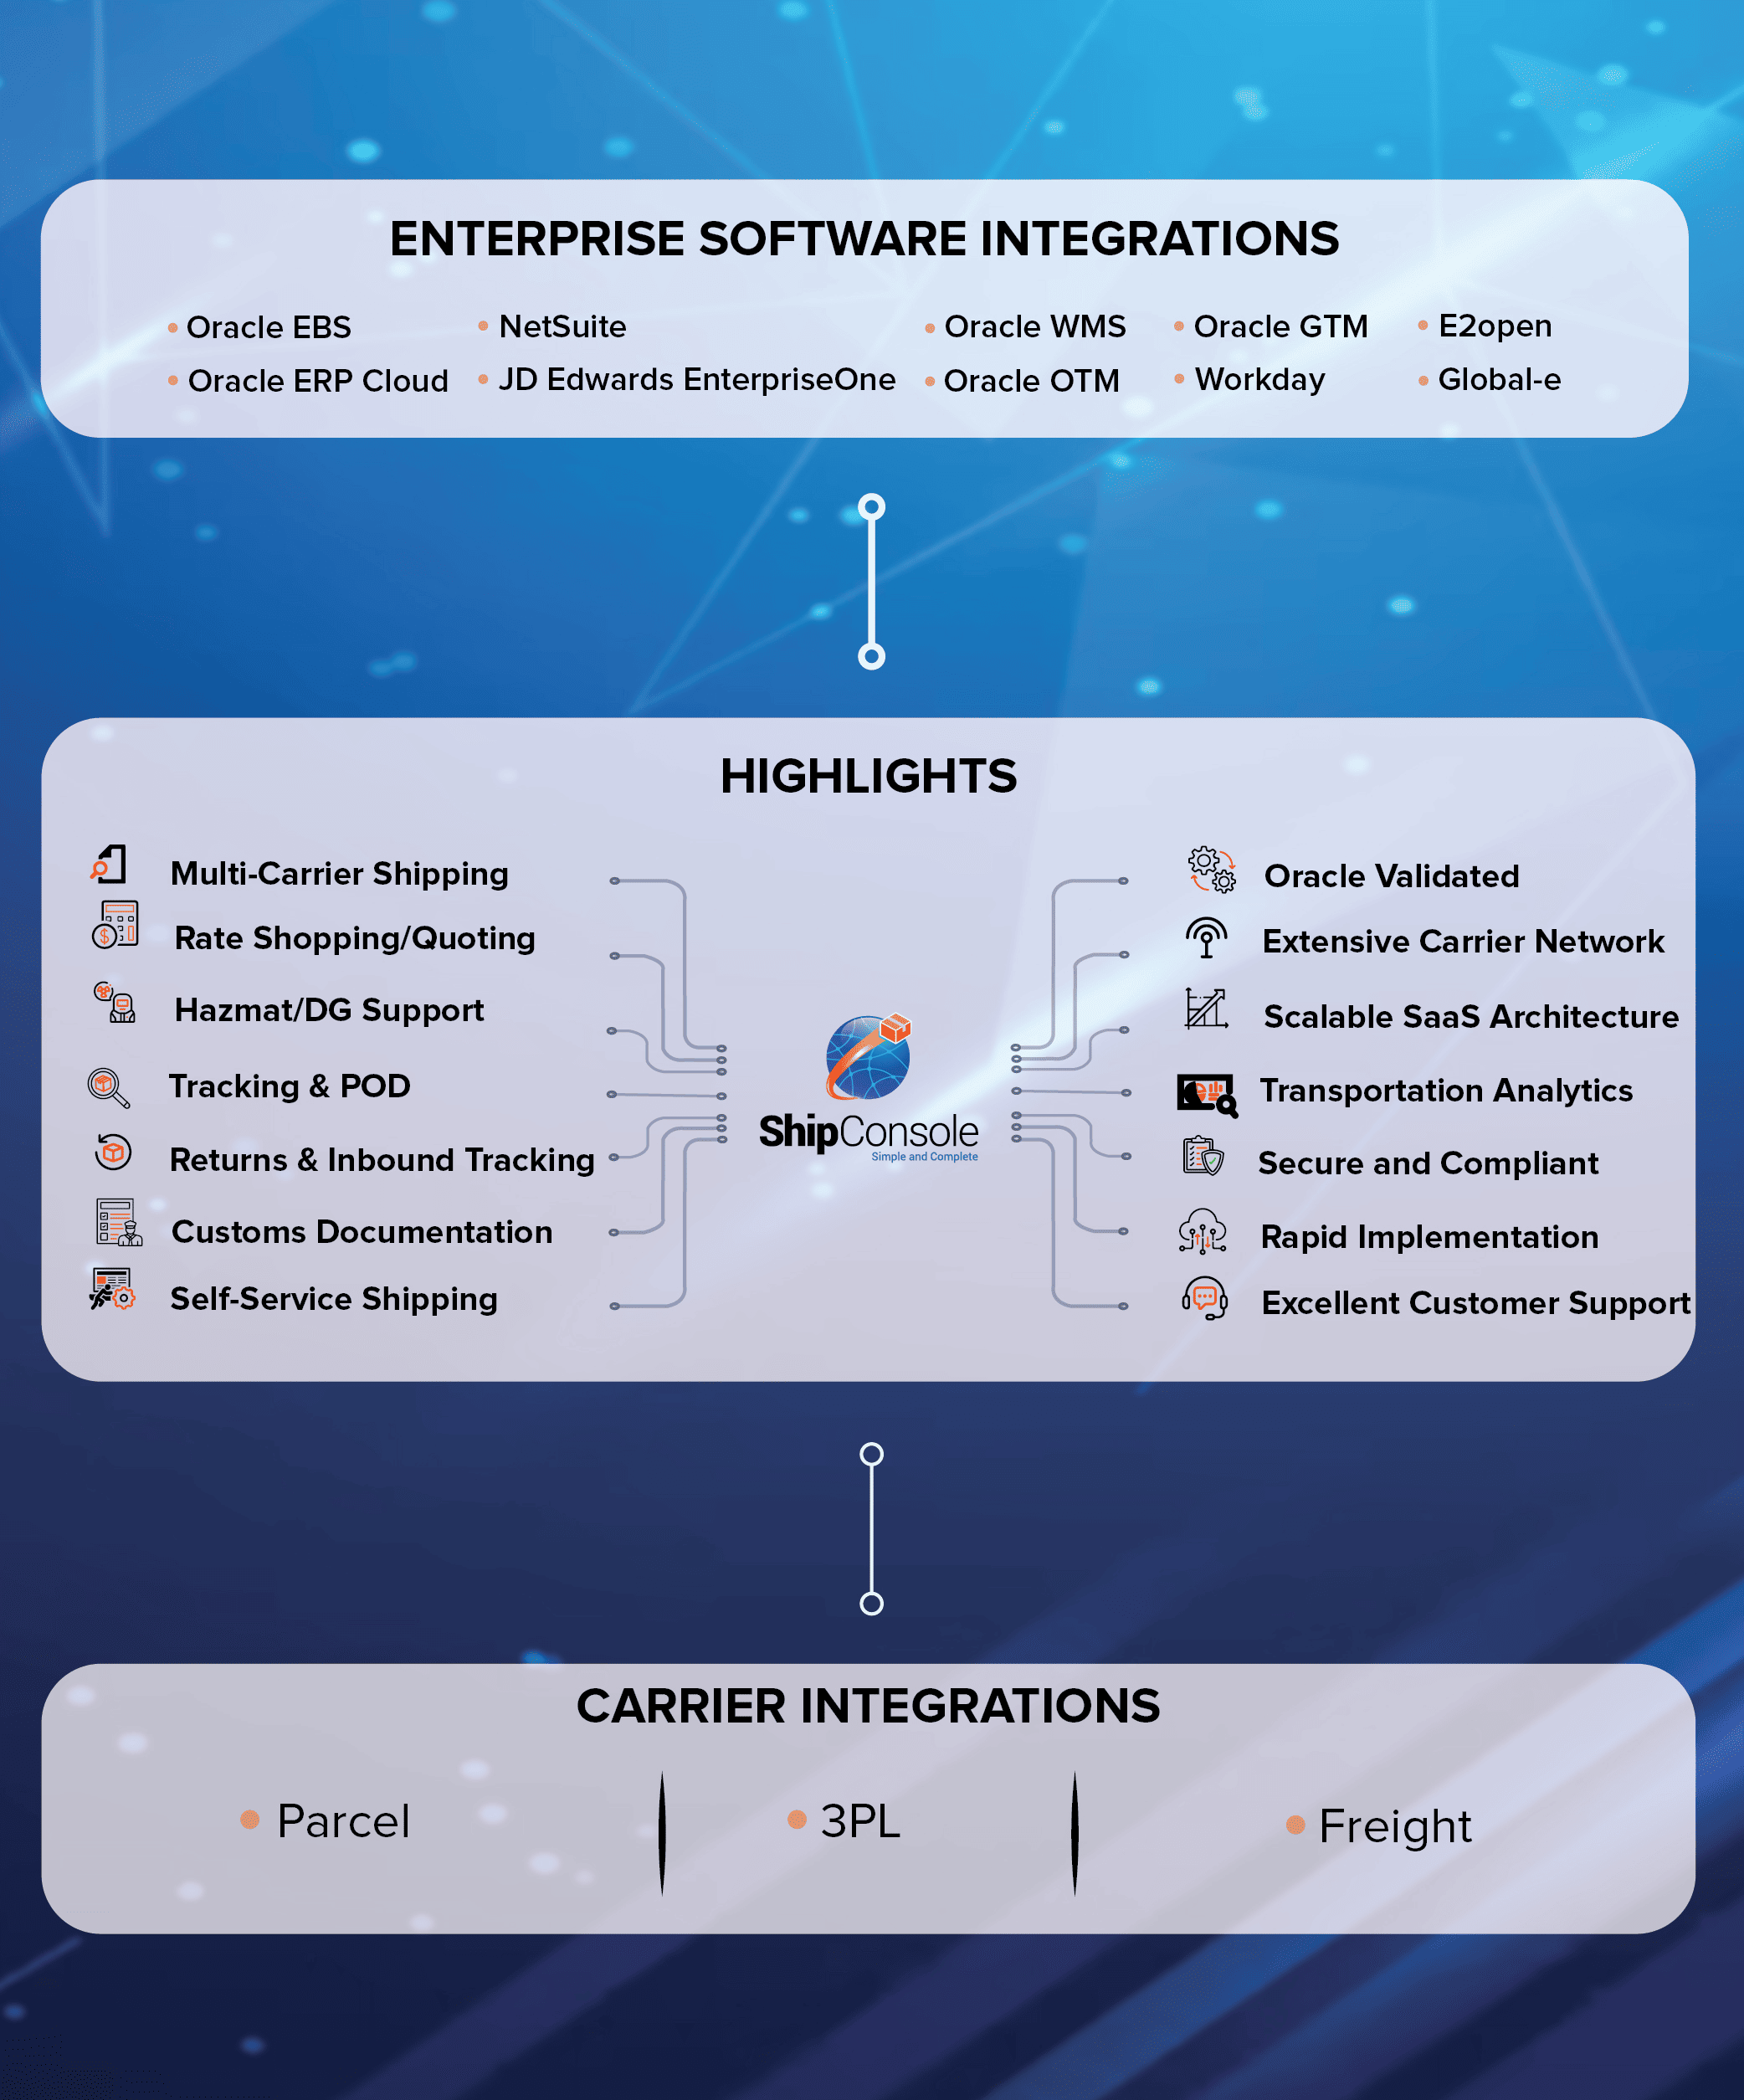 Enterprise Software Integrations